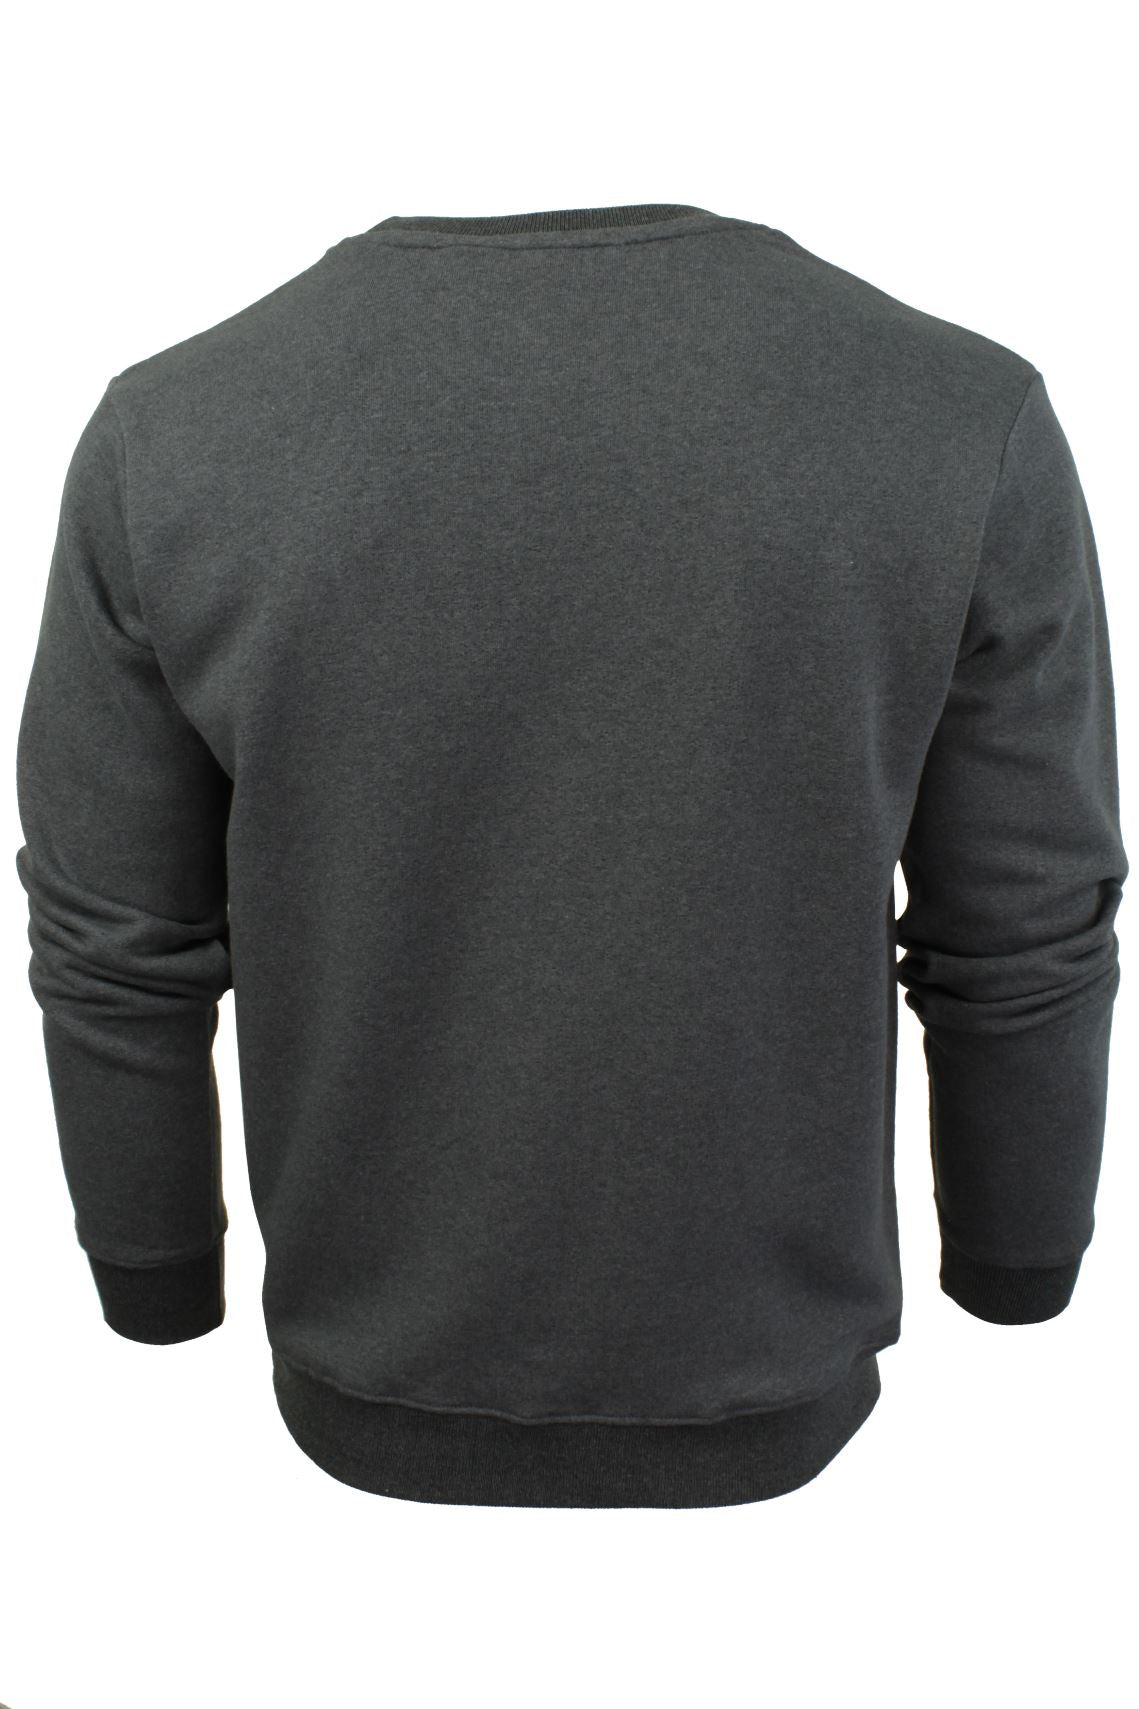 Mens Crew Neck Sweatshirt Jumper by Xact Long Sleeved (Dark Grey)-3